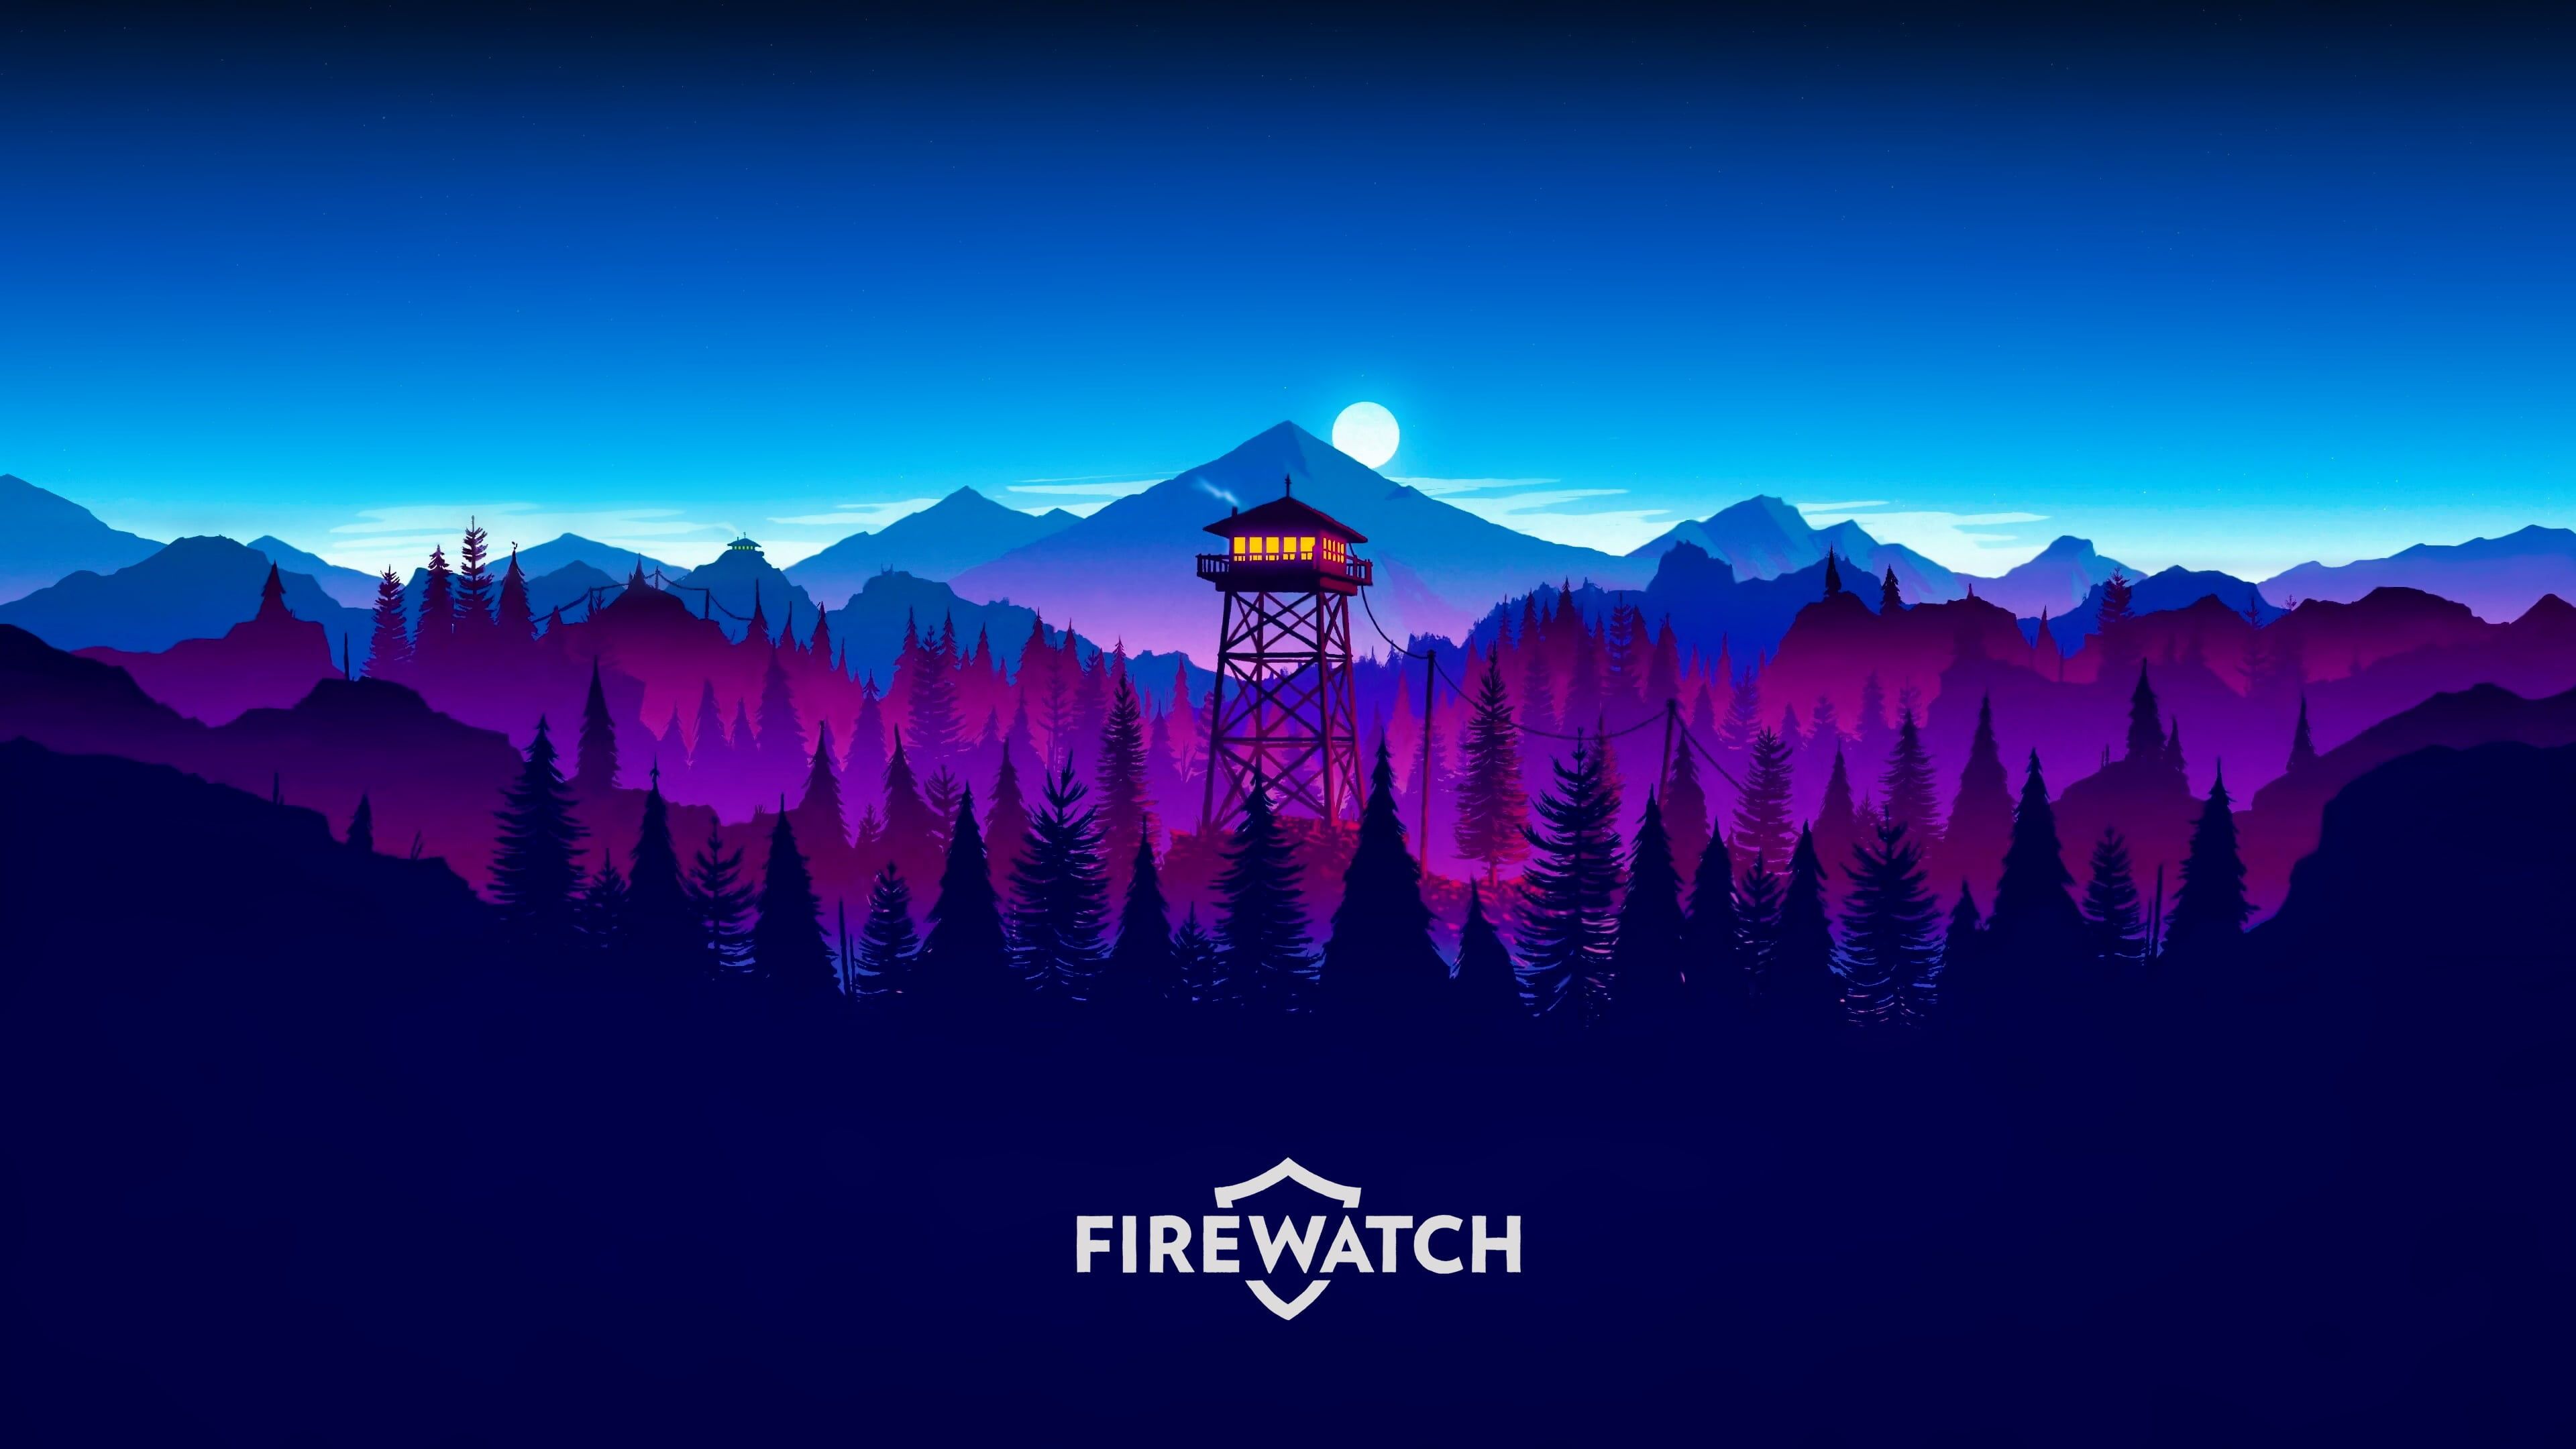 Firewatch digital wallpaper, purple and blue mountains illustration #Firewatch video games #forest #nature #la. Sunset artwork, Digital wallpaper, Anime wallpaper